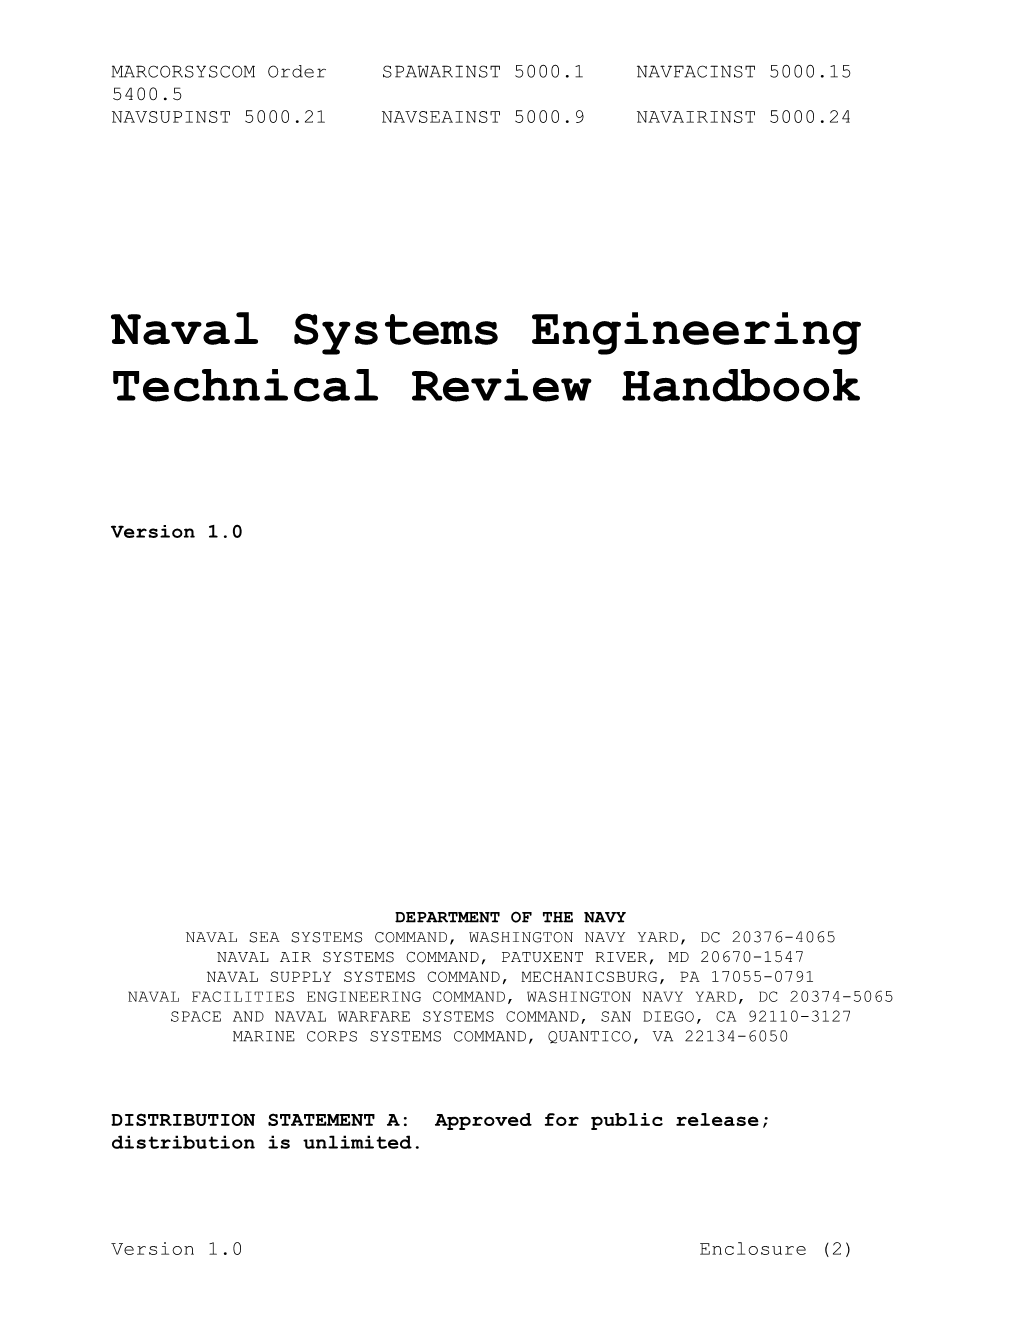 Naval SETR Handbook